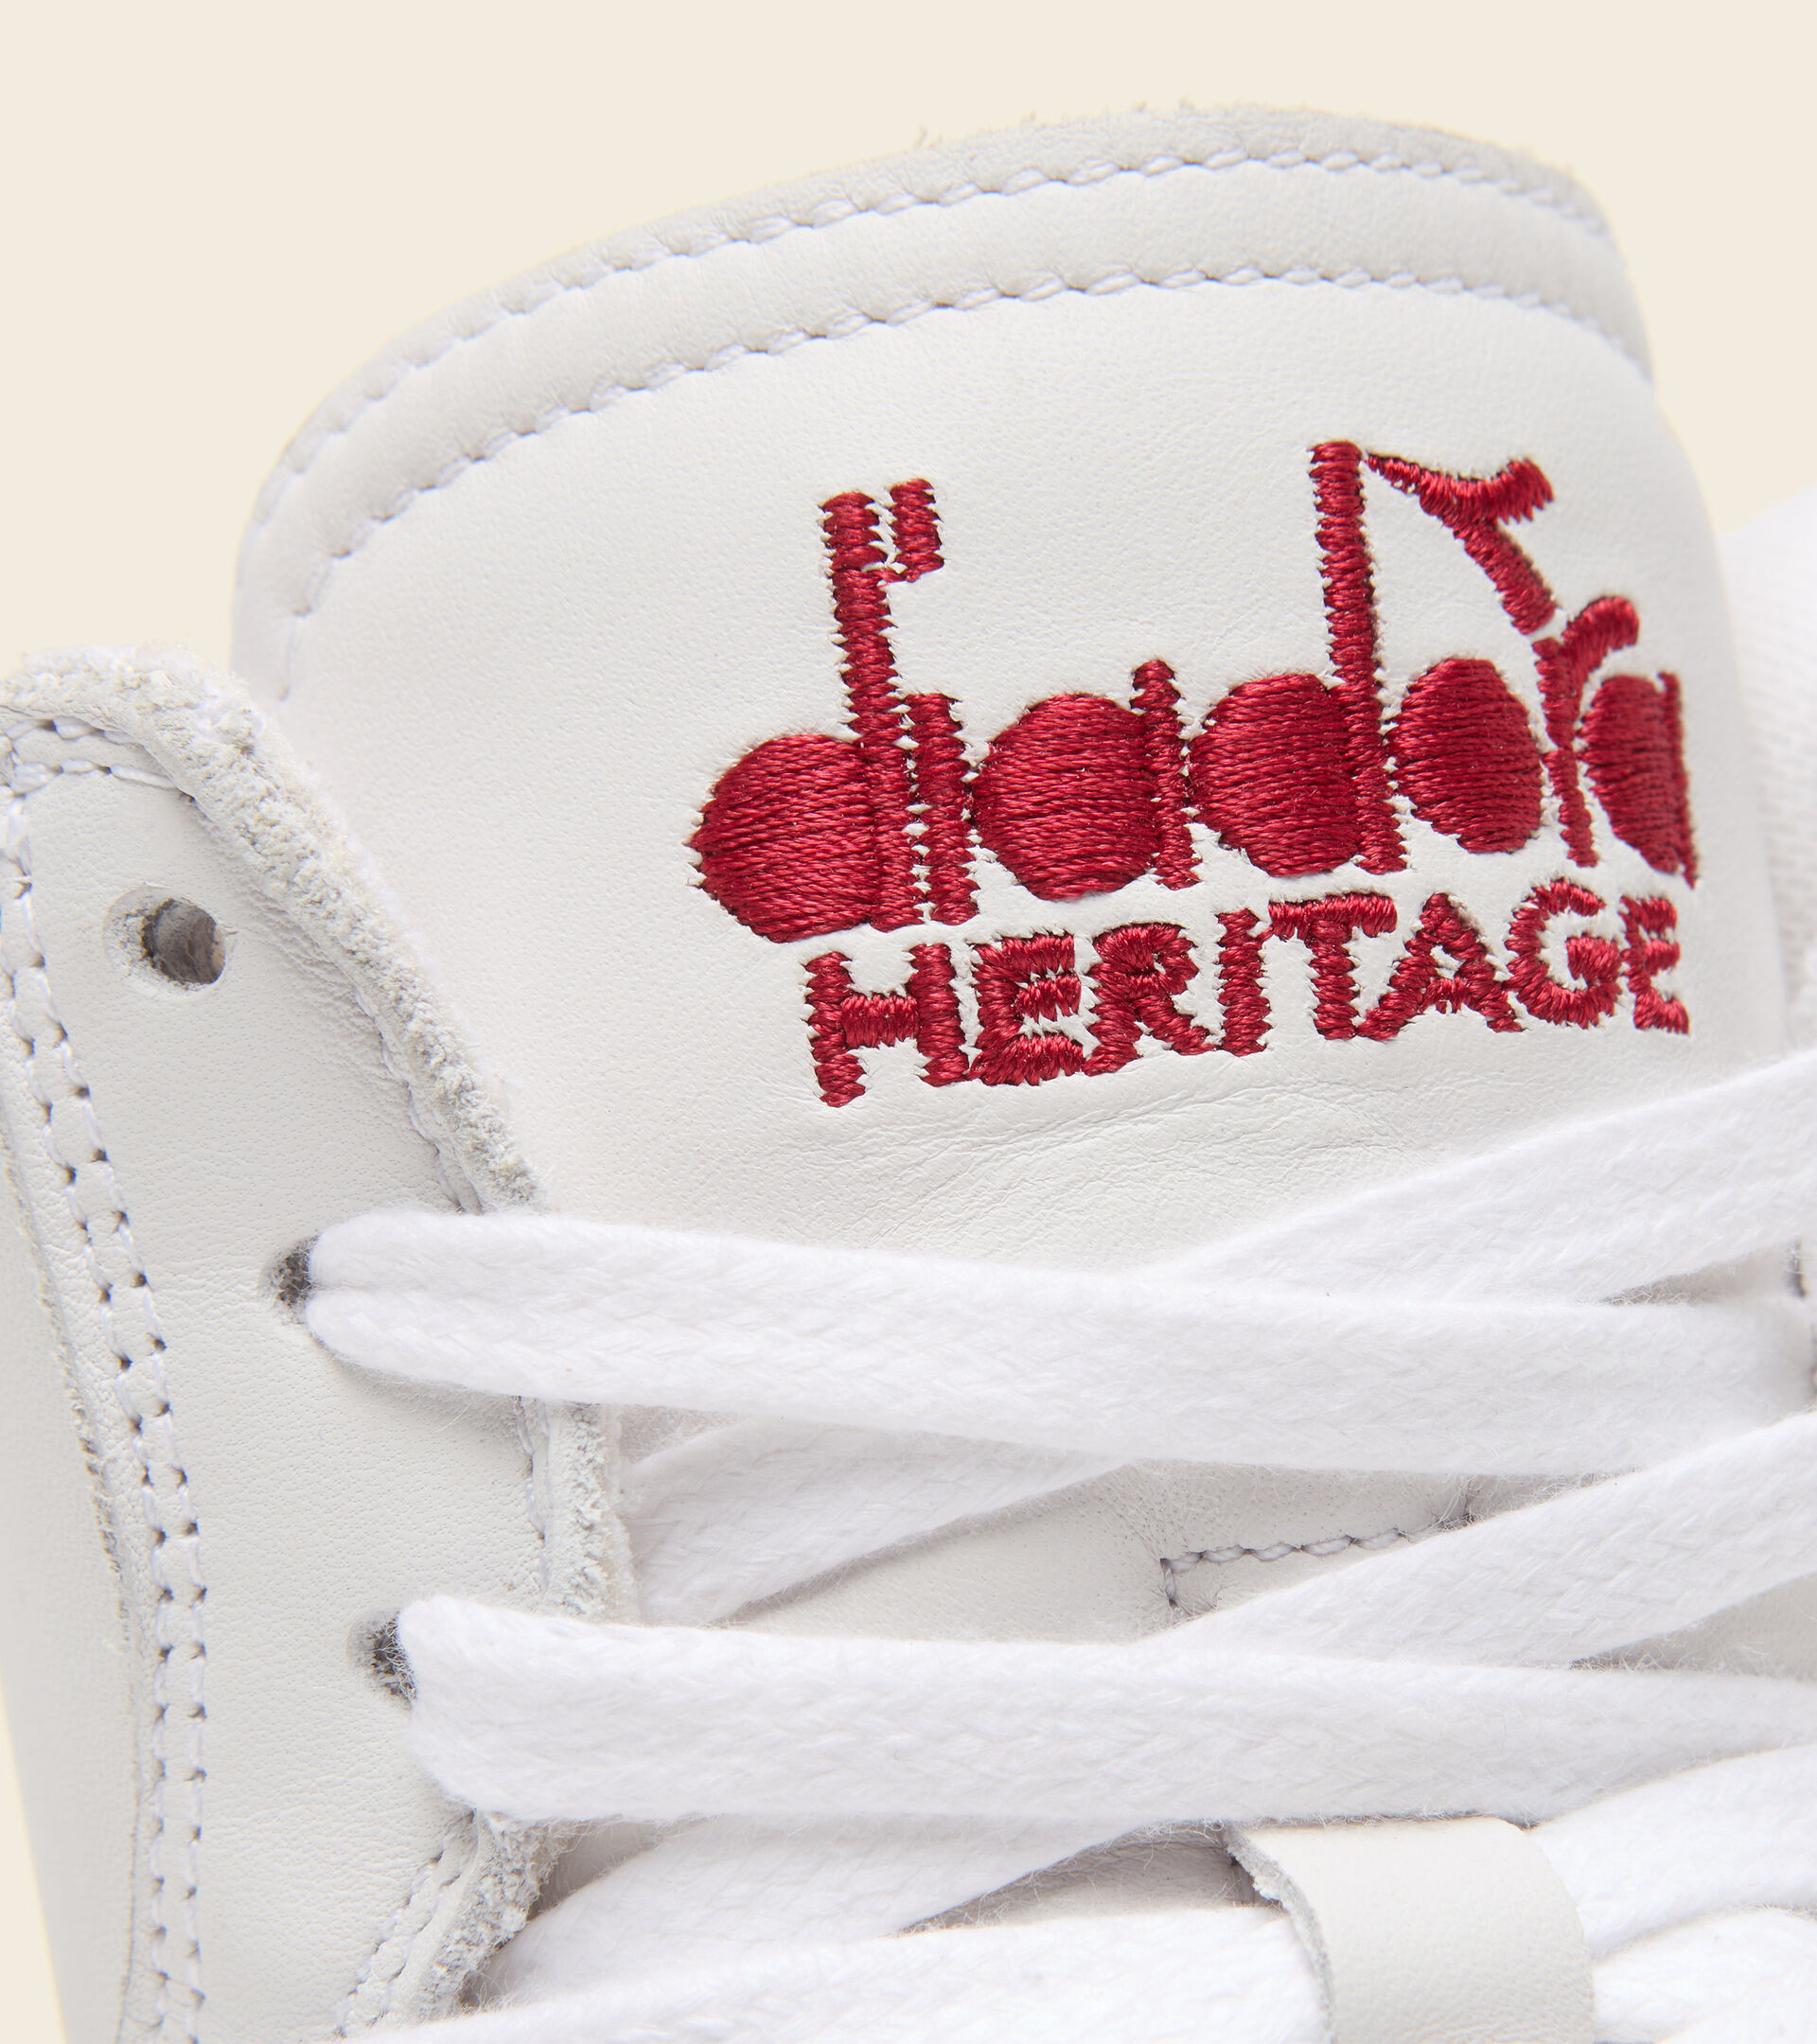 Heritage shoe - Unisex MI BASKET USED WHITE/GARNET - Diadora